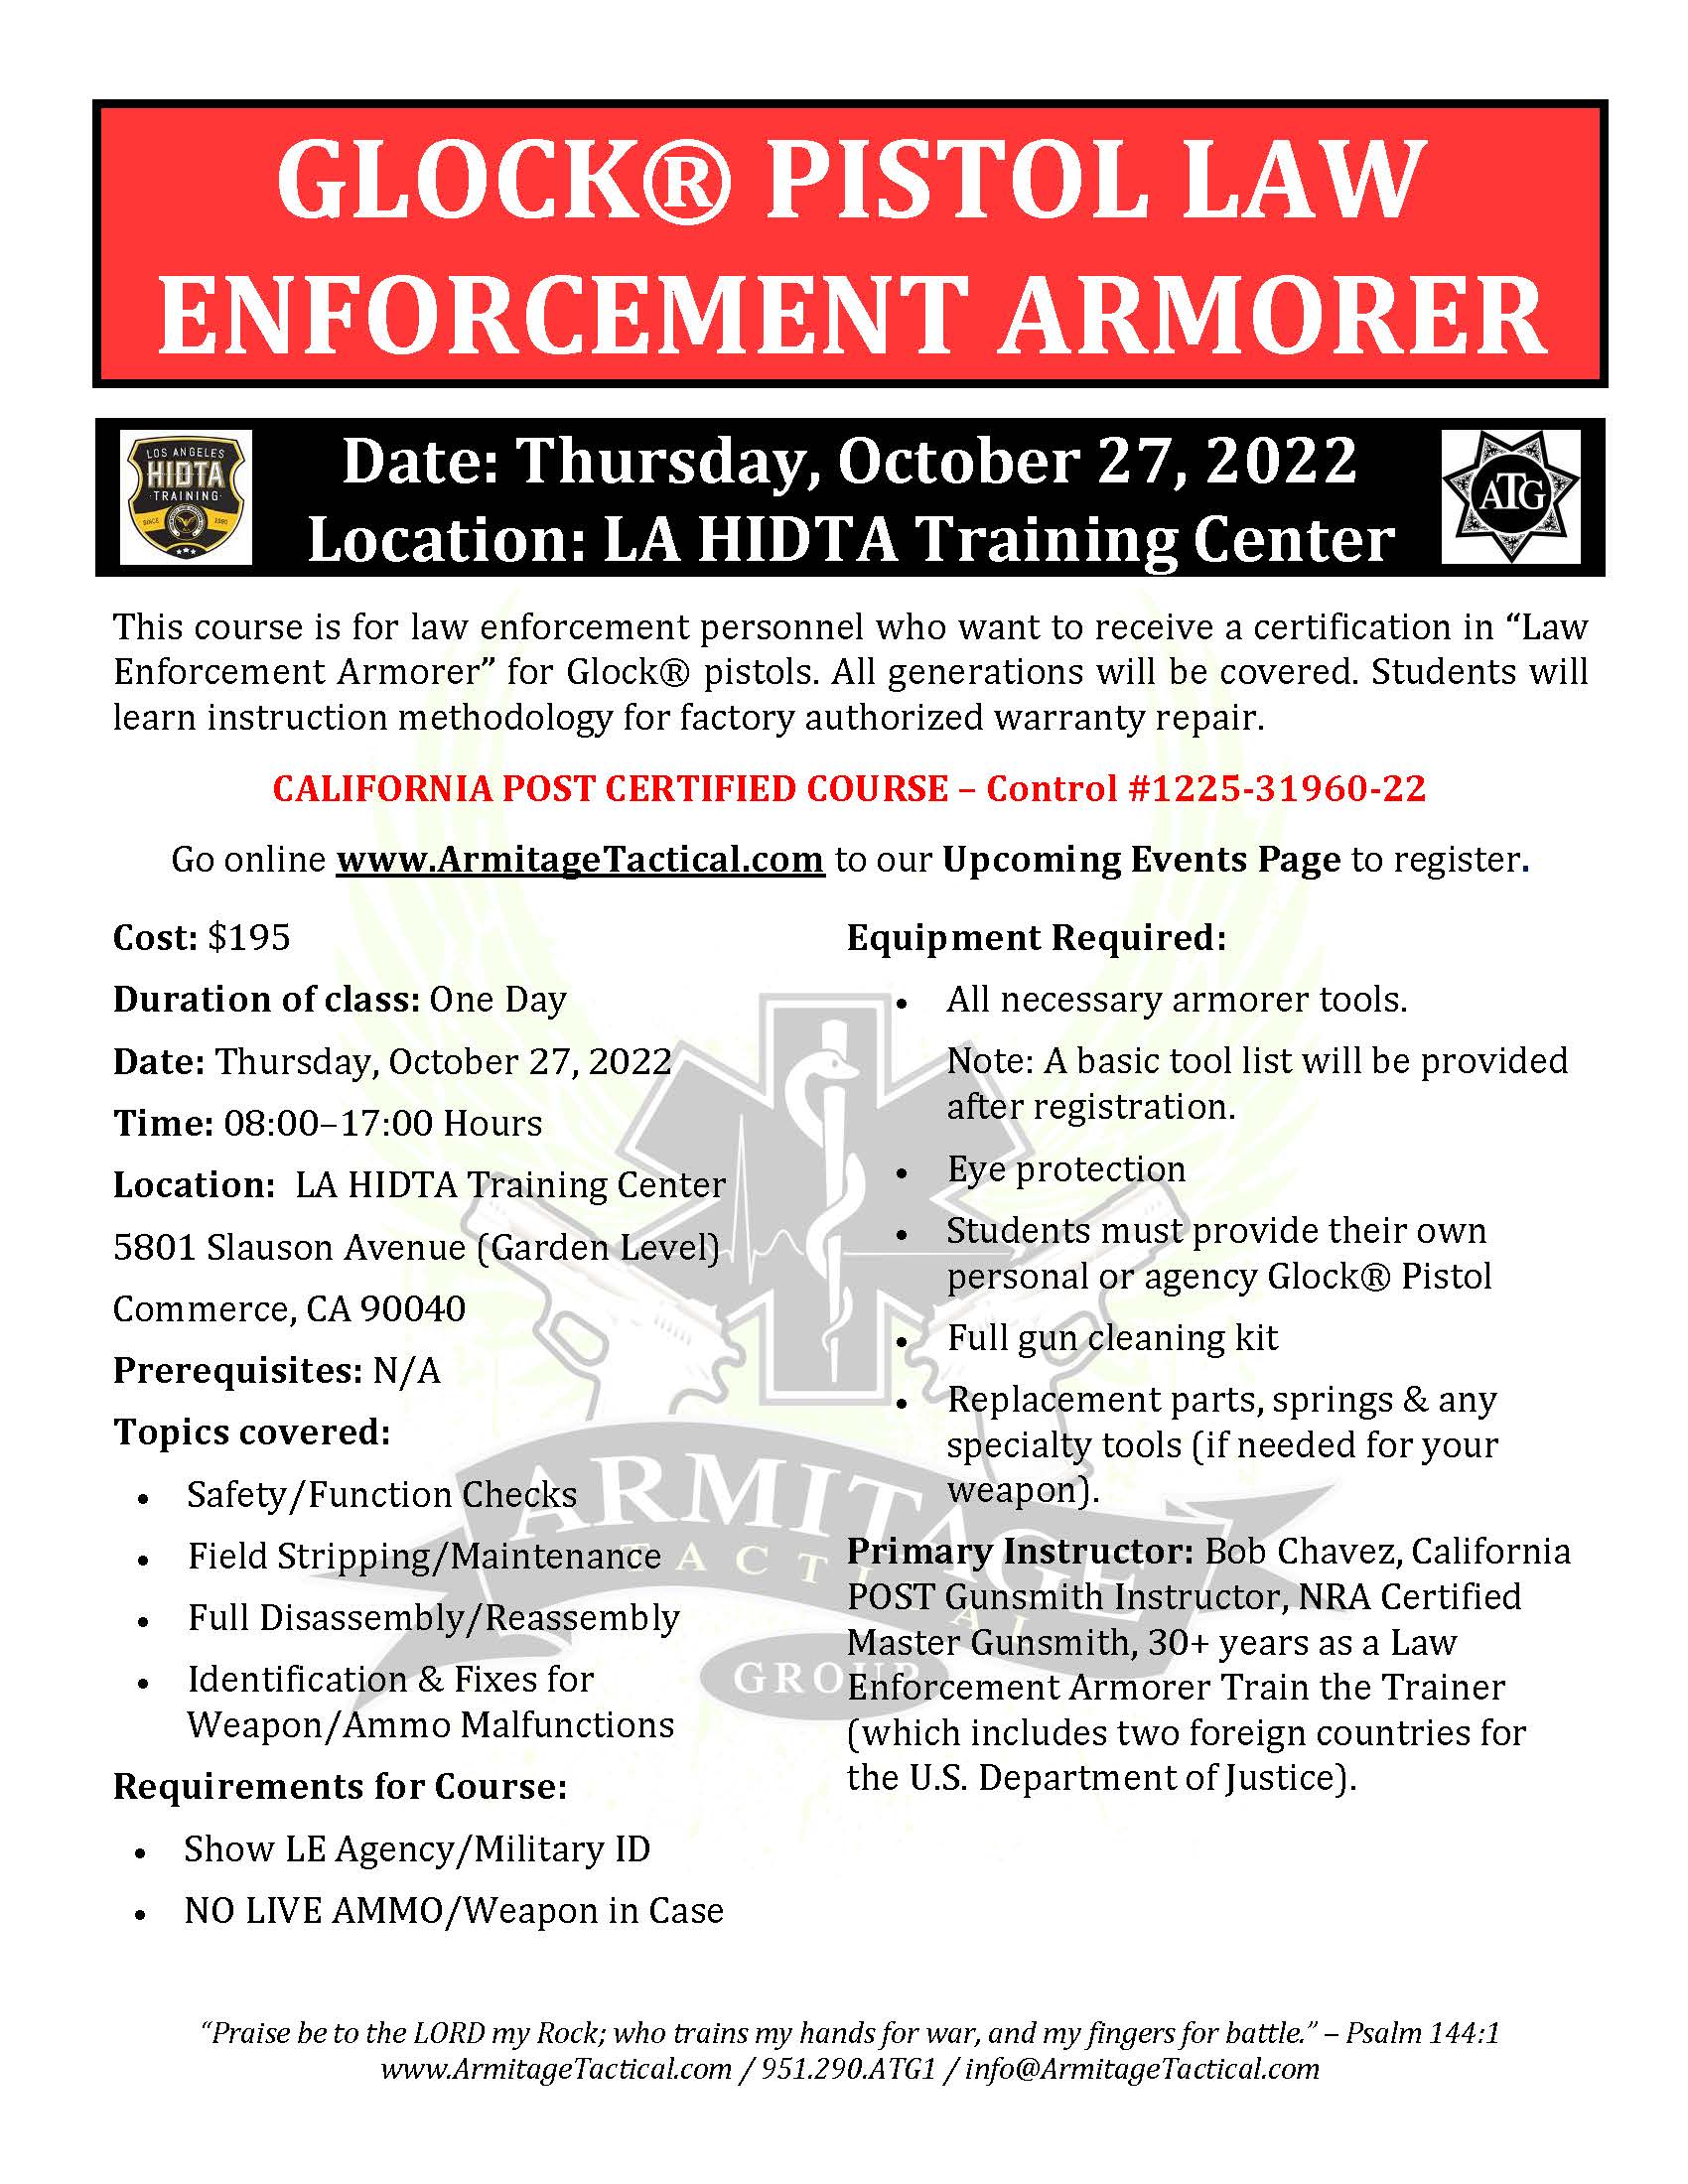 2022/10/27 - Glock LE Armorer's Course - Commerce, CA